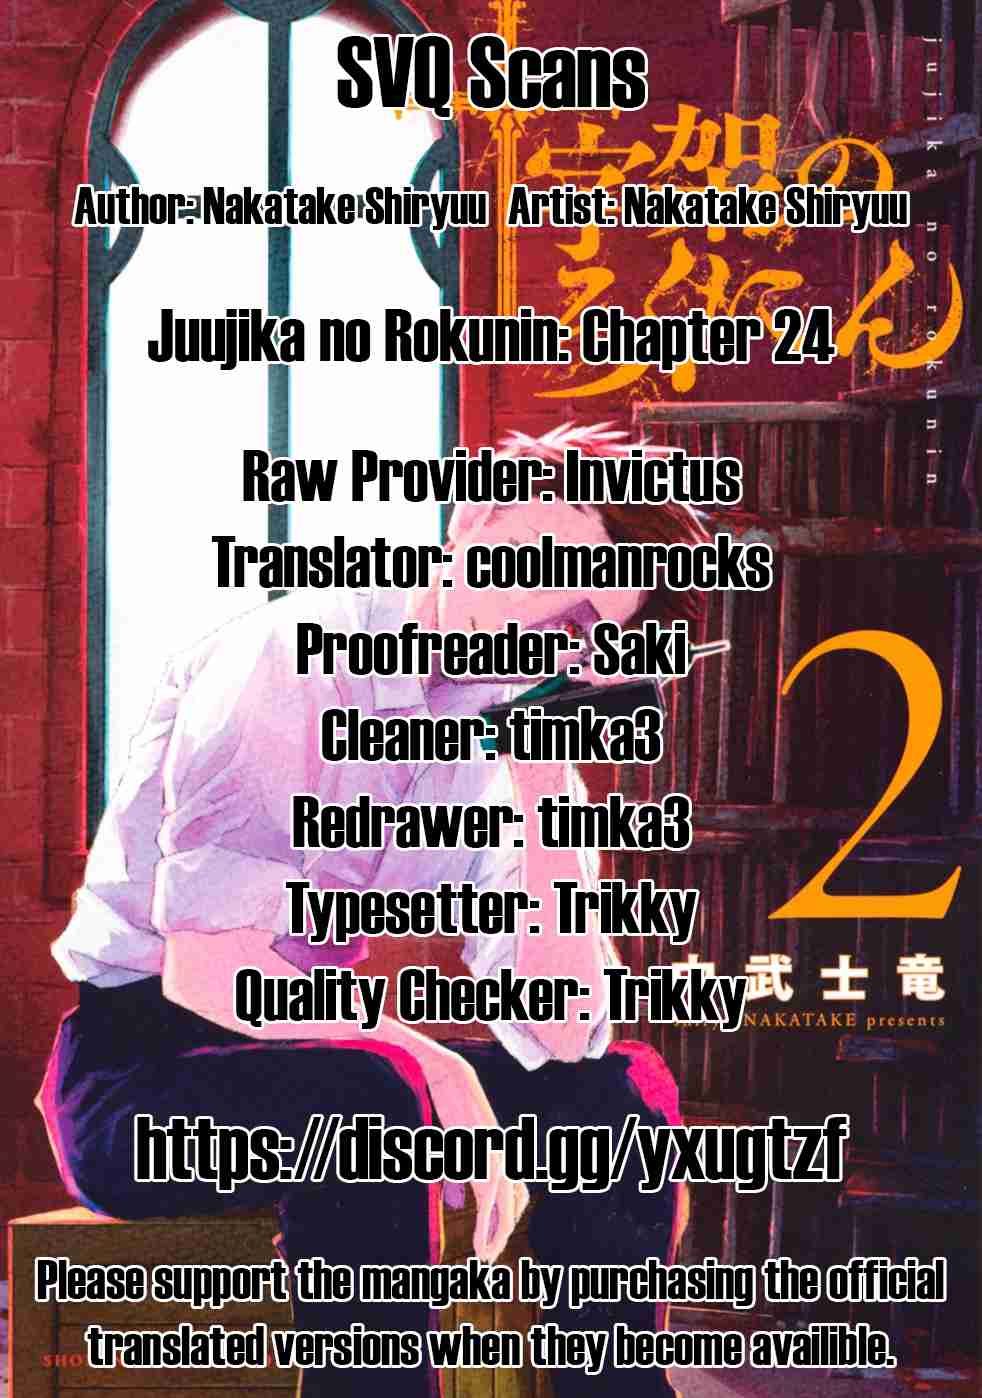 Juujika no Rokunin Ch. 24 Target